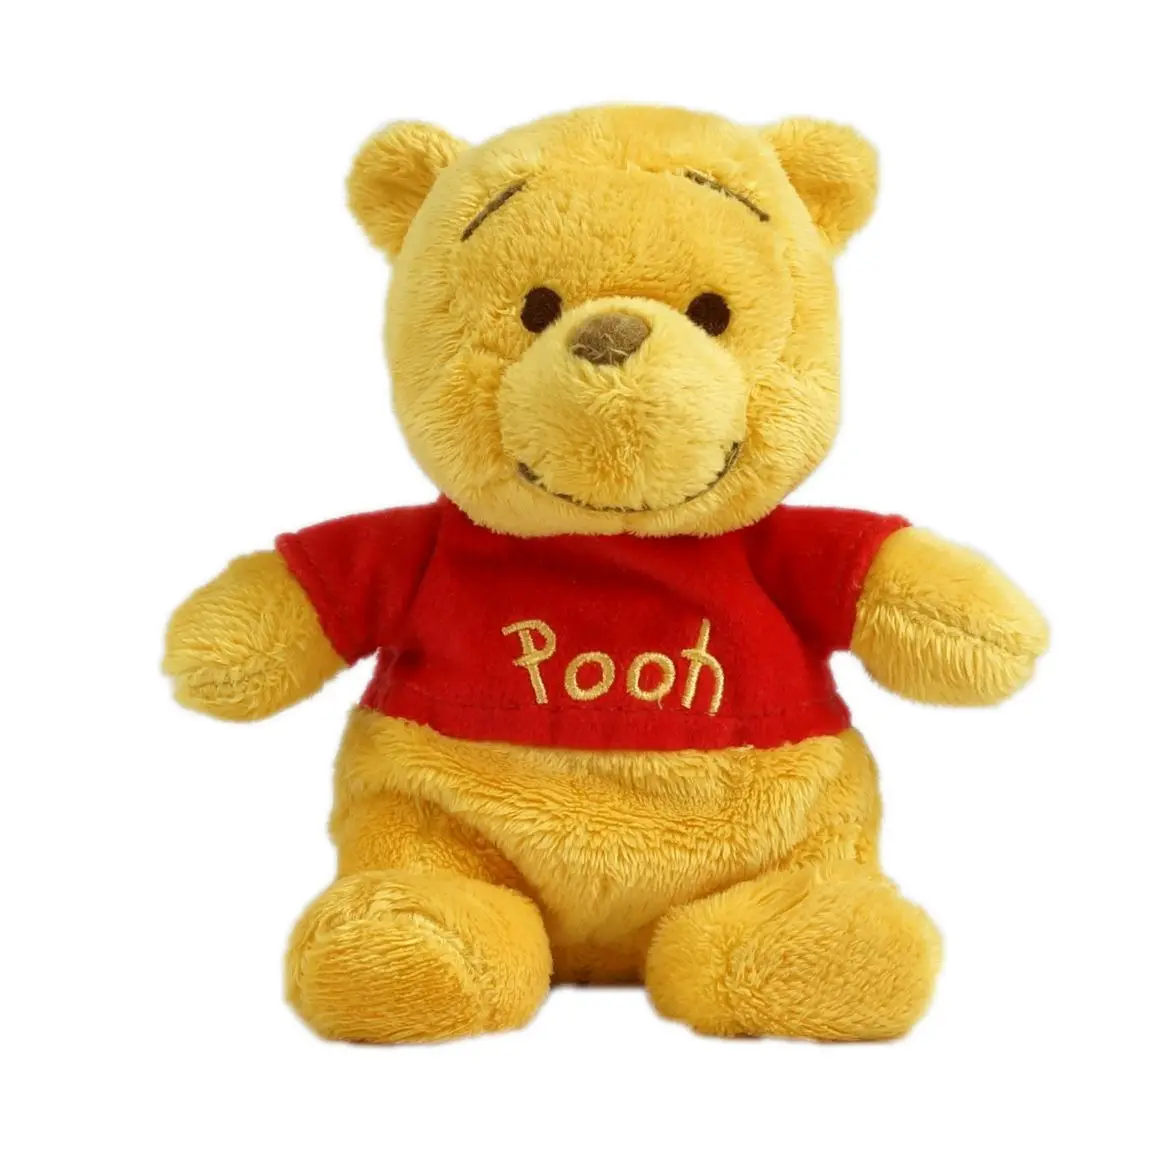 Muñeco de peluche de Pooh, Winnie the Pooh